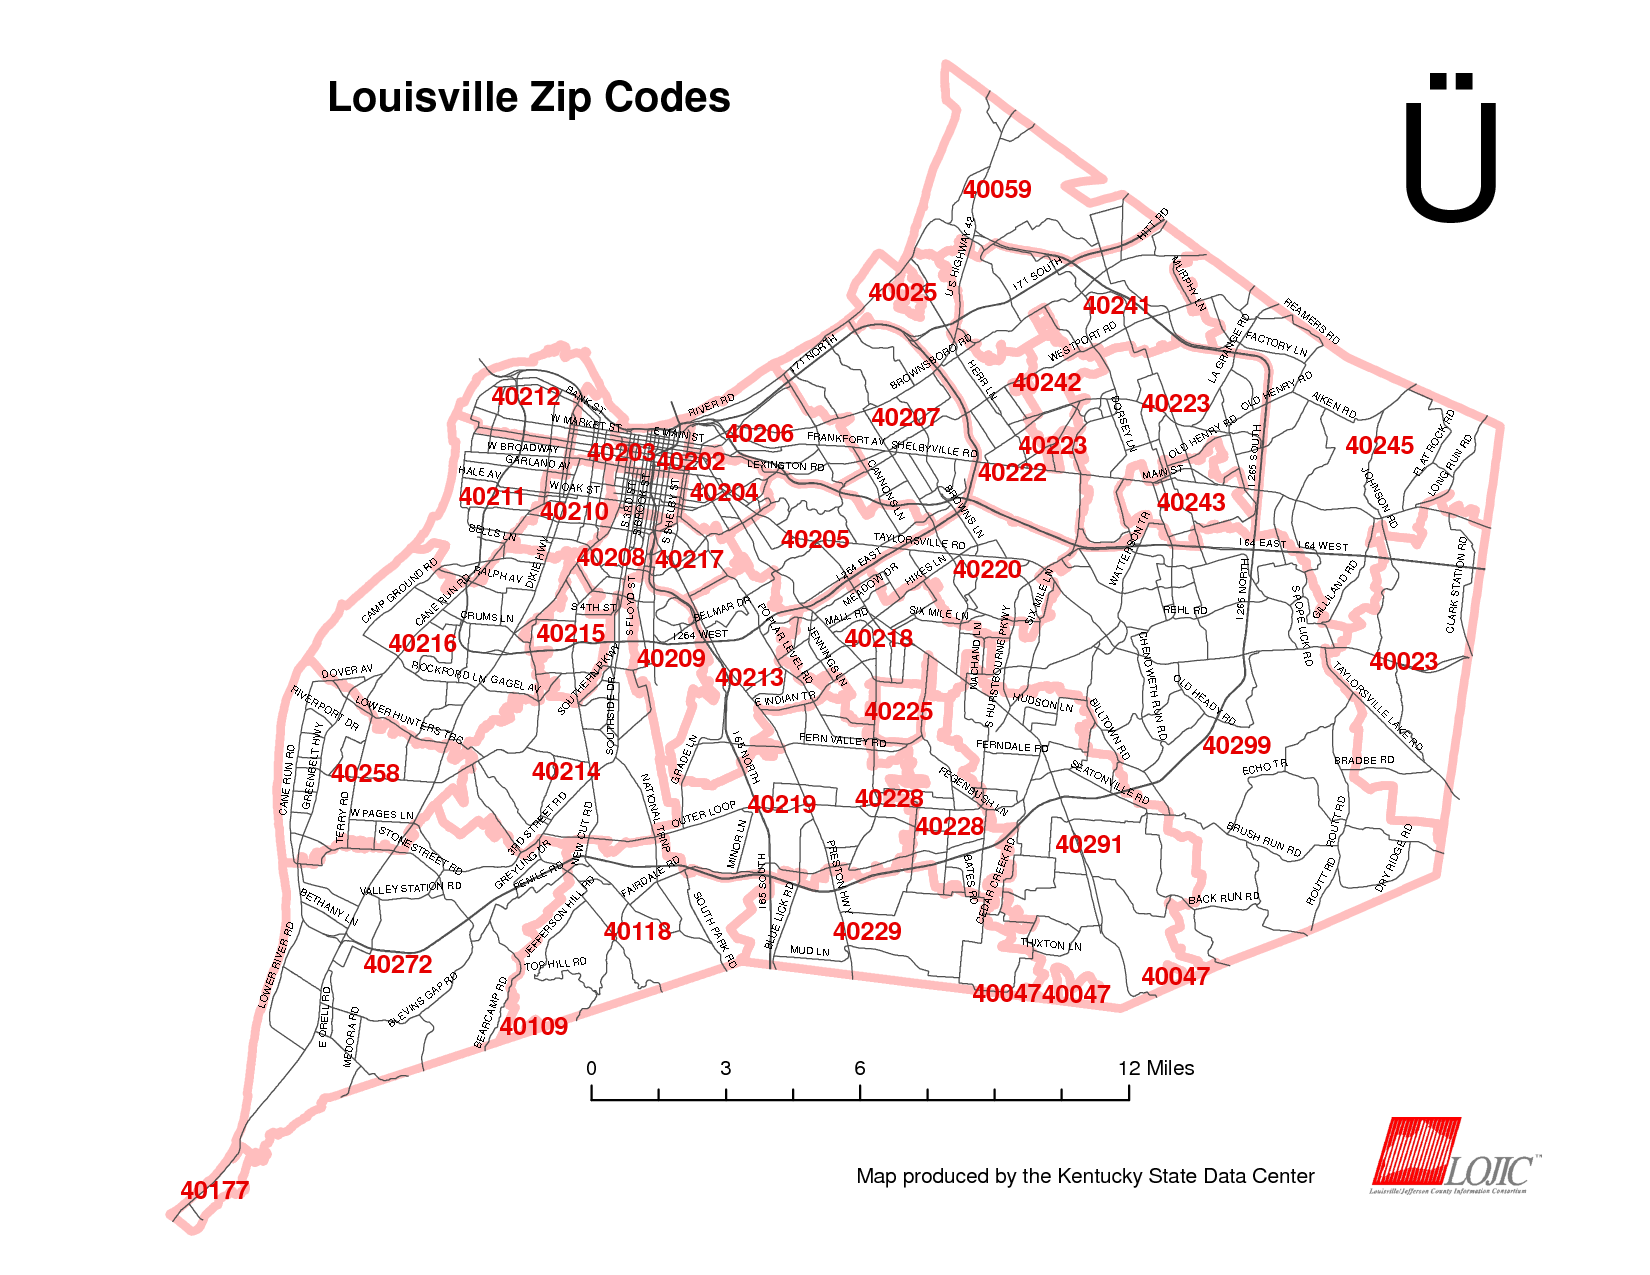 Louisville KY Zip Code httpwwwdocstoccomdocs79779587Louisville